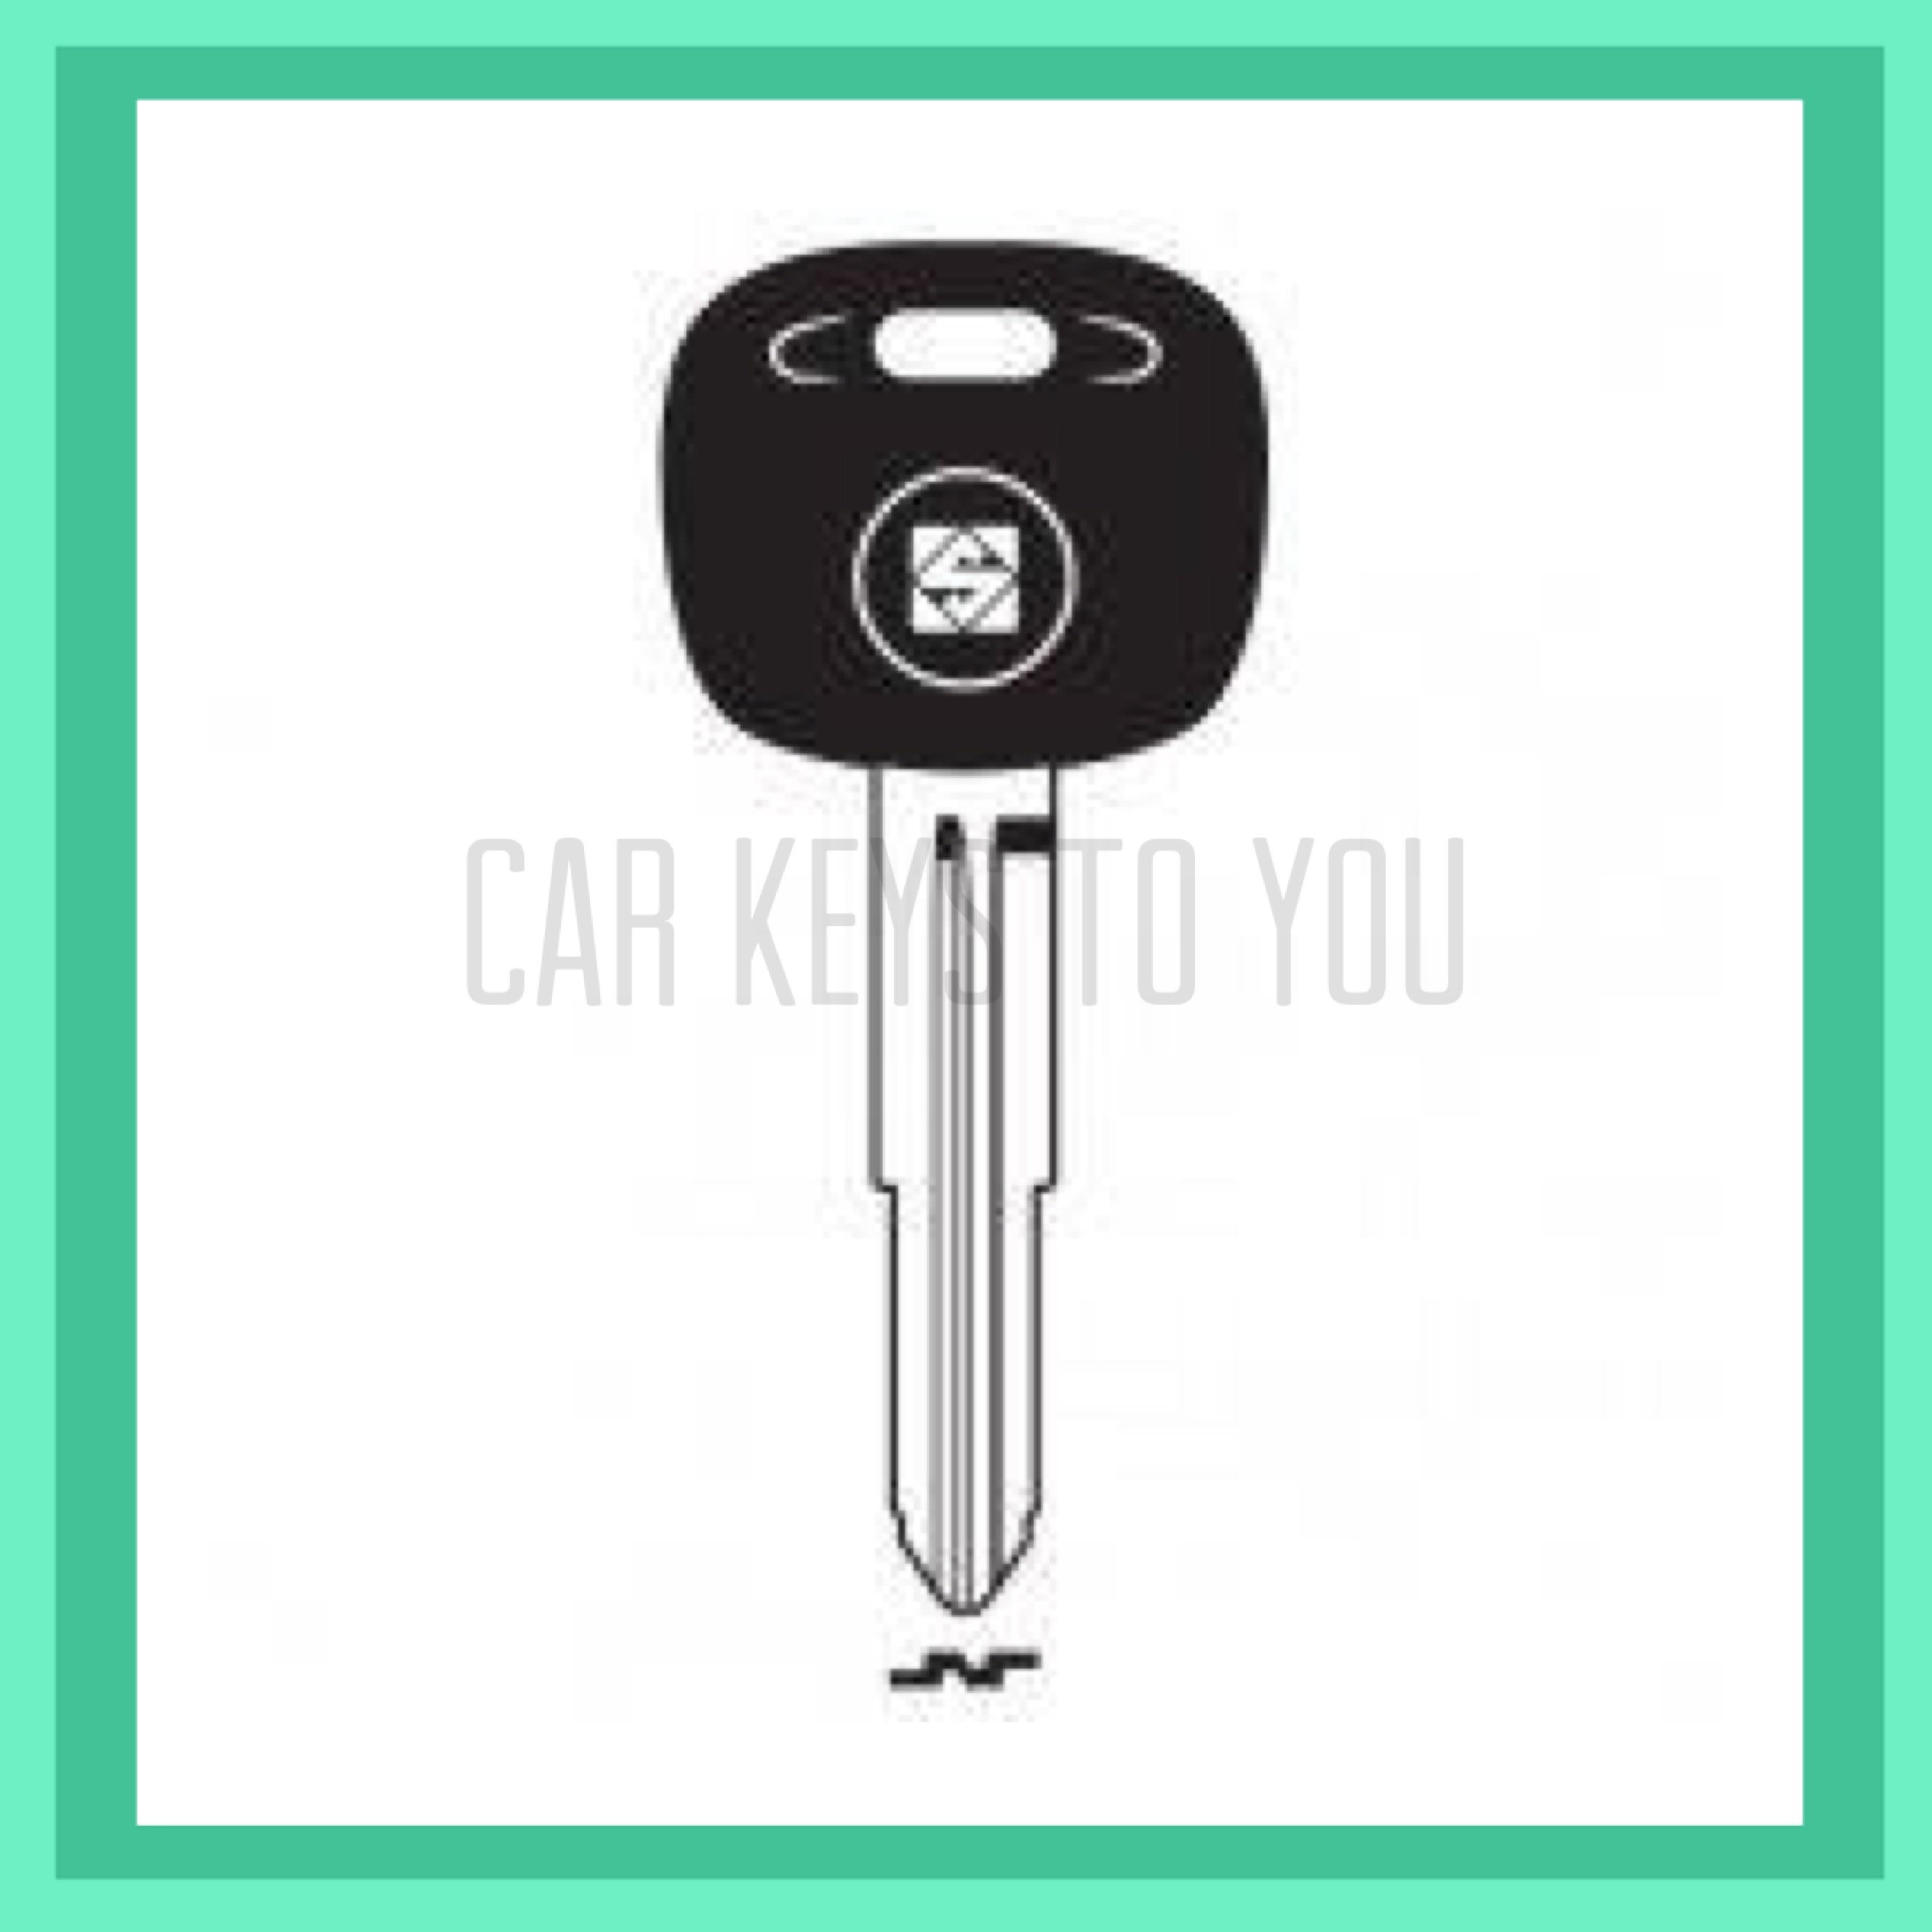 Mitsubishi Triton Car Key and Remote, Suit MK 2002 - 2007